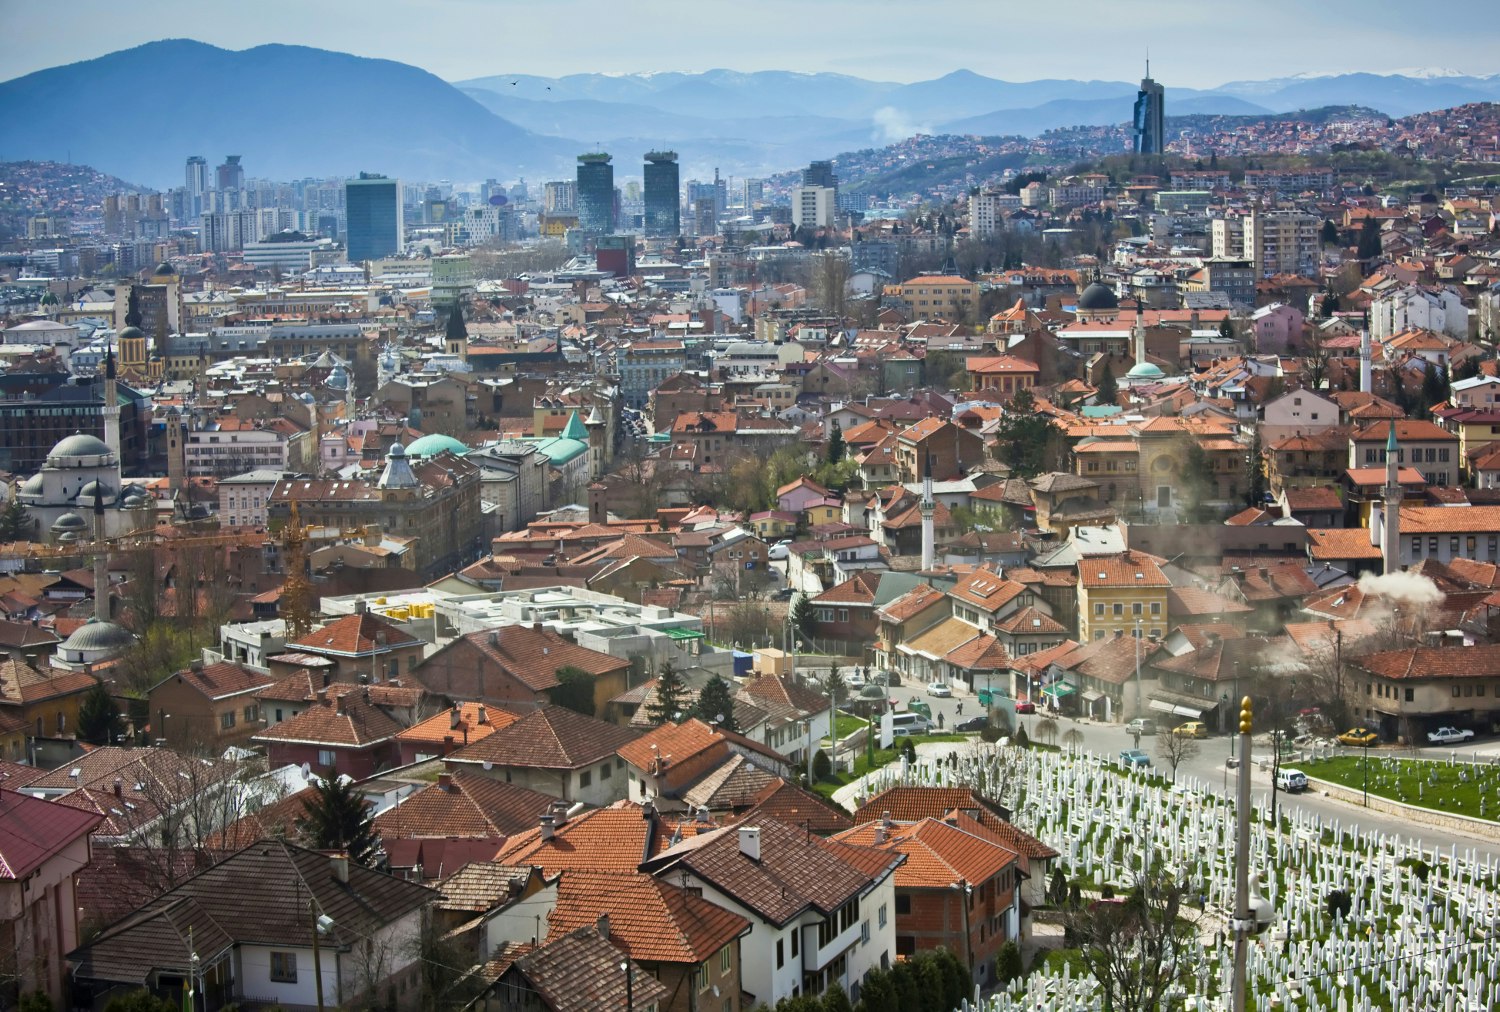 Sarajevo's hills give beautiful views over the city